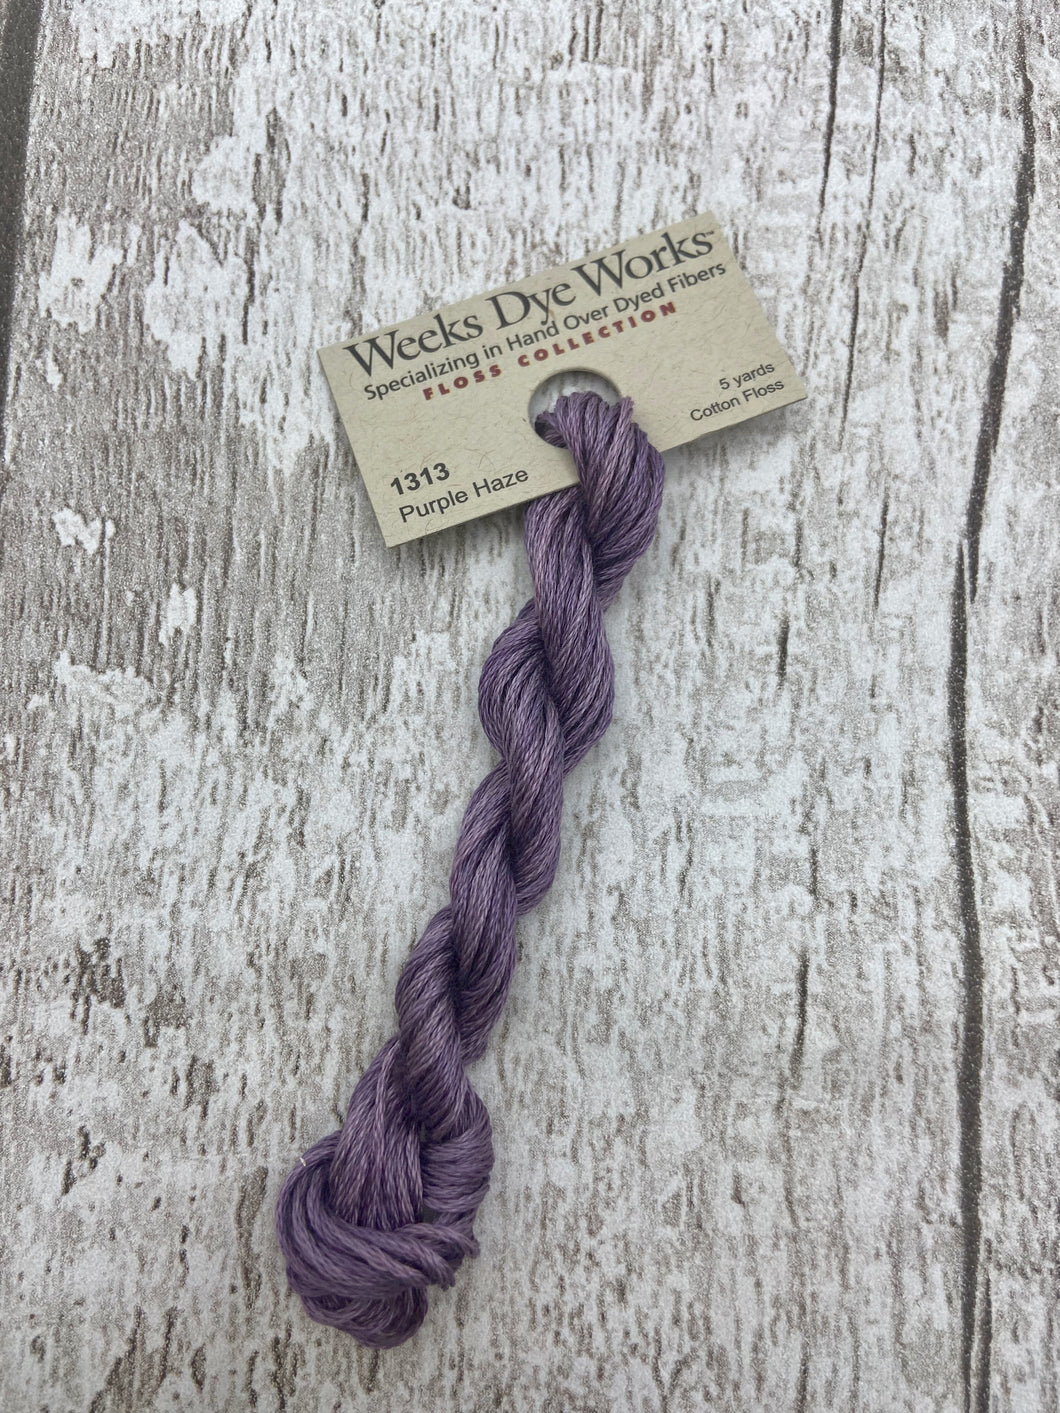 Purple Haze (#1313) Weeks Dye Works, 6-strand cotton floss